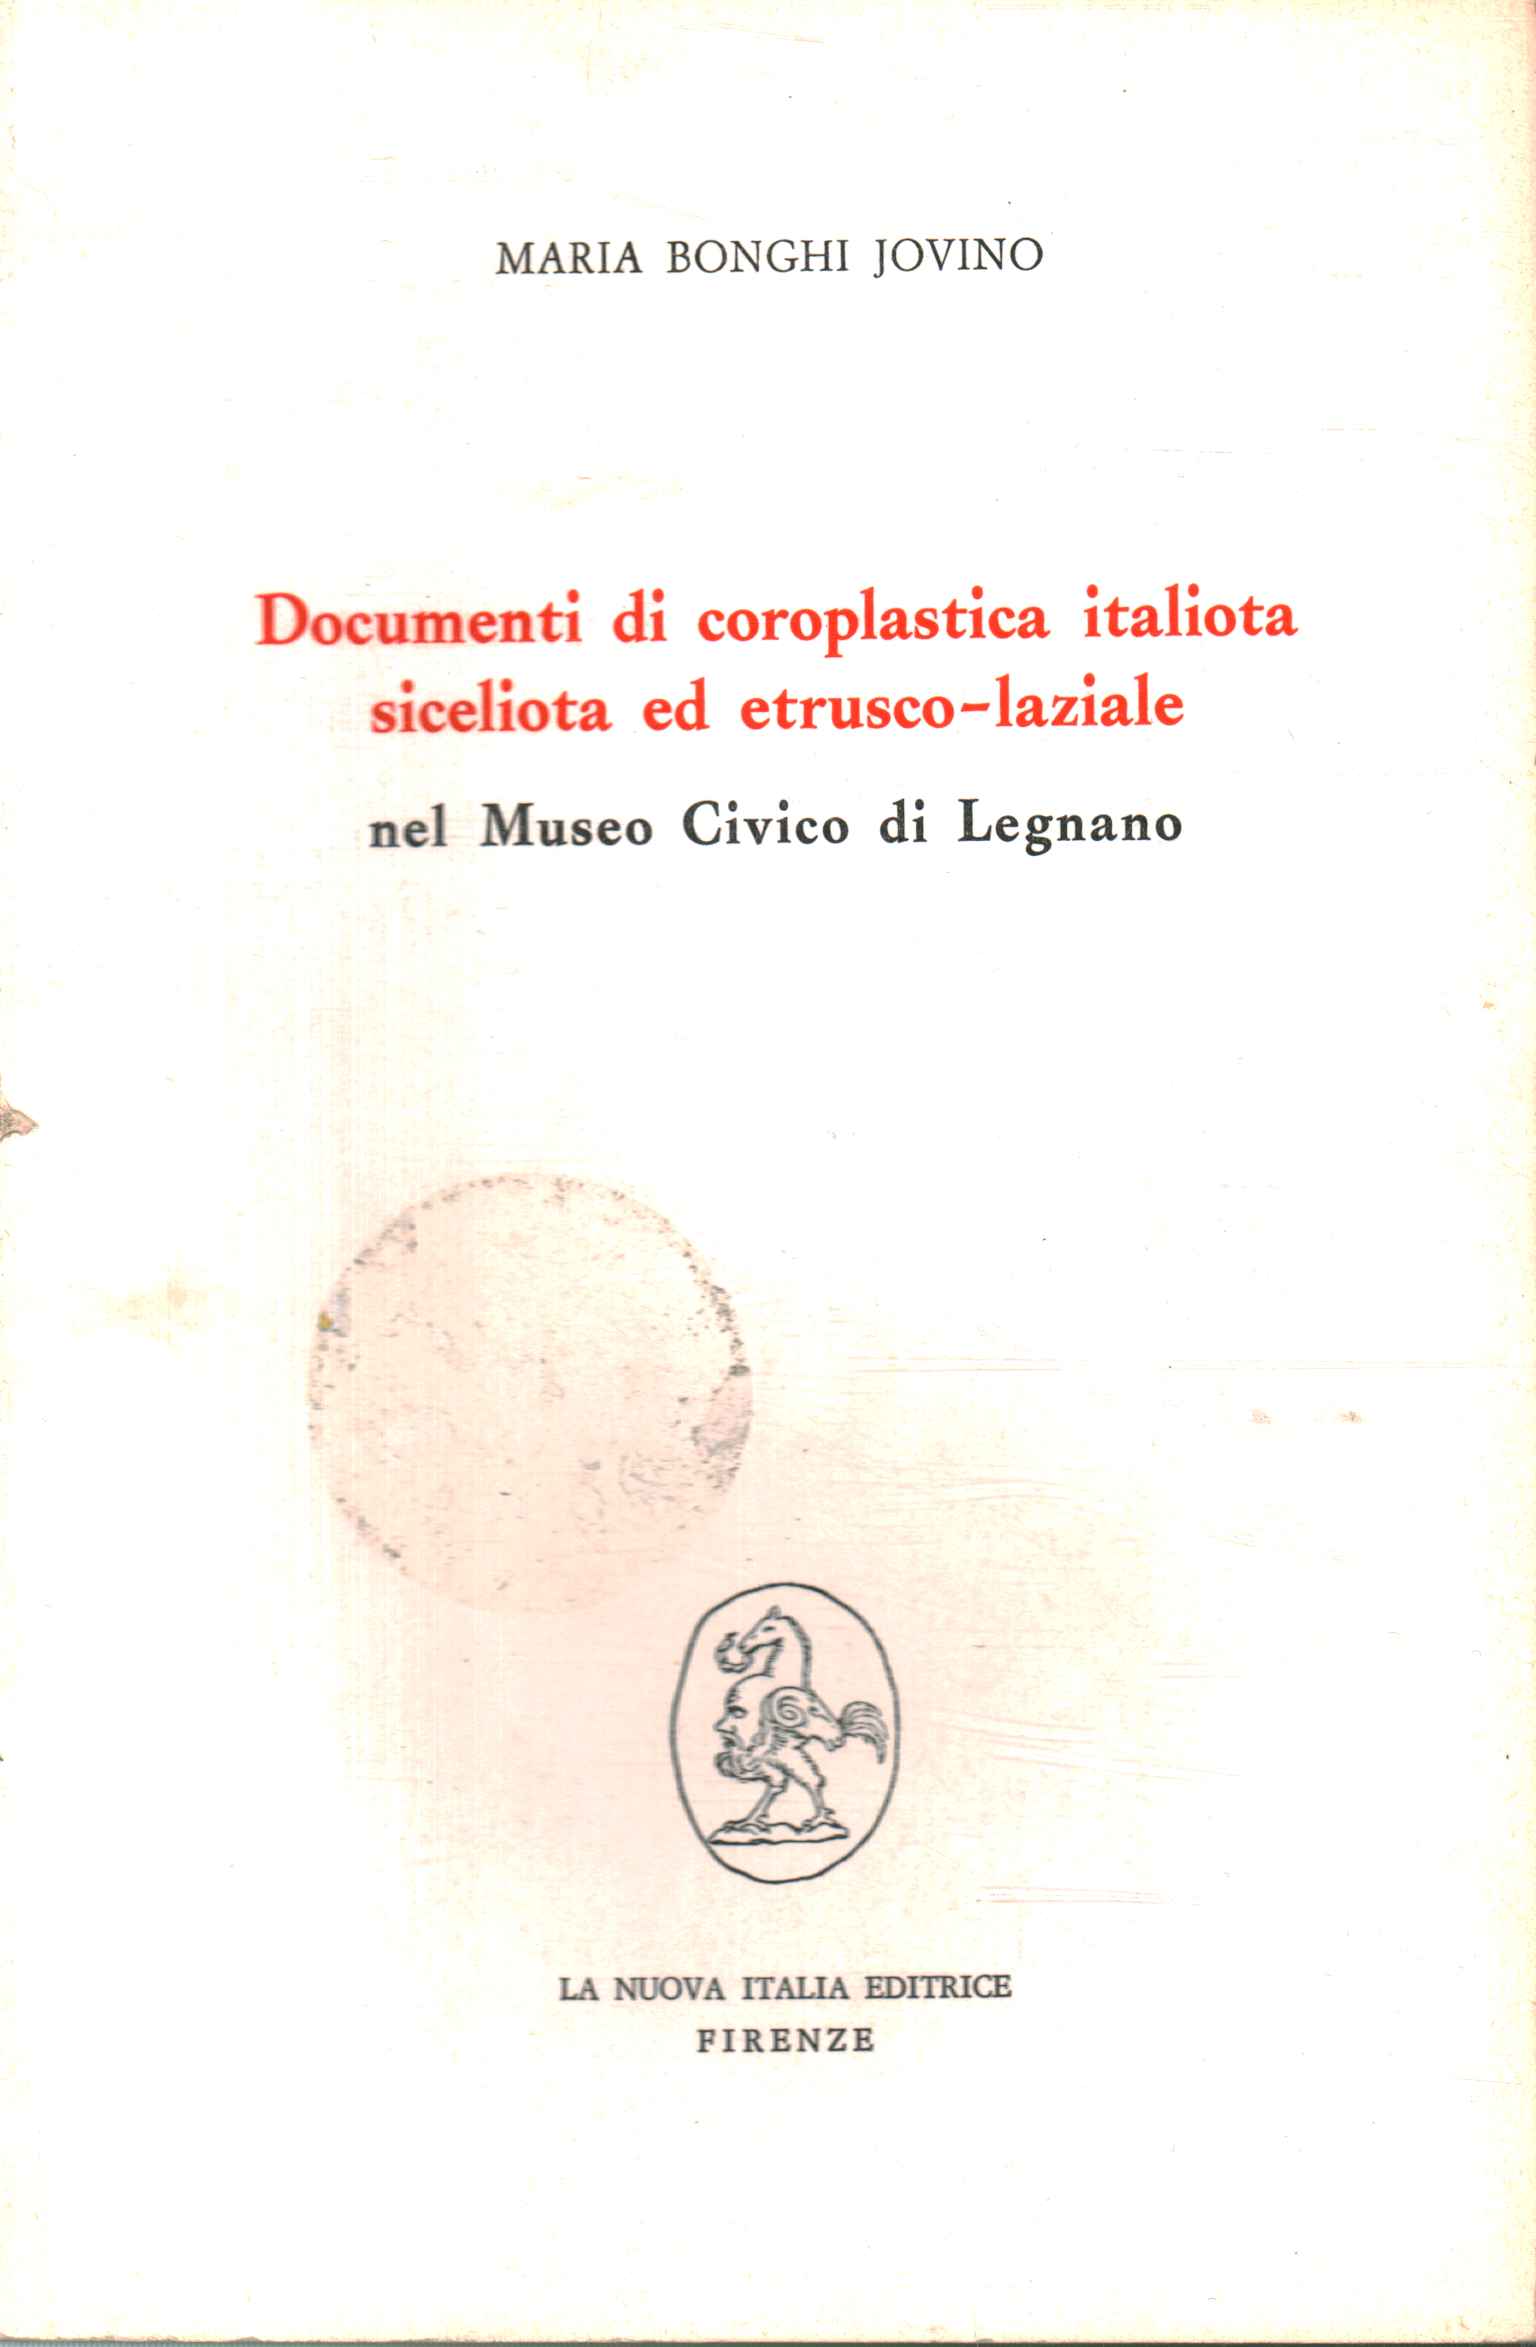 Documentos de coroplastia italiana siciliana.